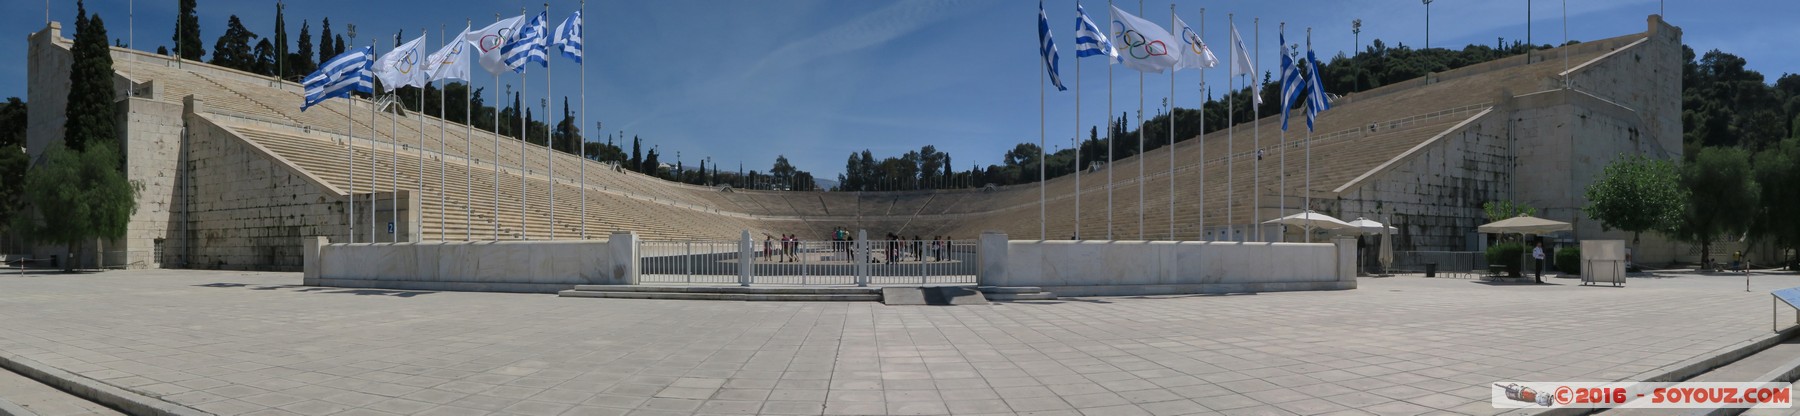 Athens - Panathinaiko Stadium - panorama
Stitched Panorama
Mots-clés: Athina Proastia GRC Grèce Mets Athens Athenes Attica Panathinaiko Stadium grec panorama